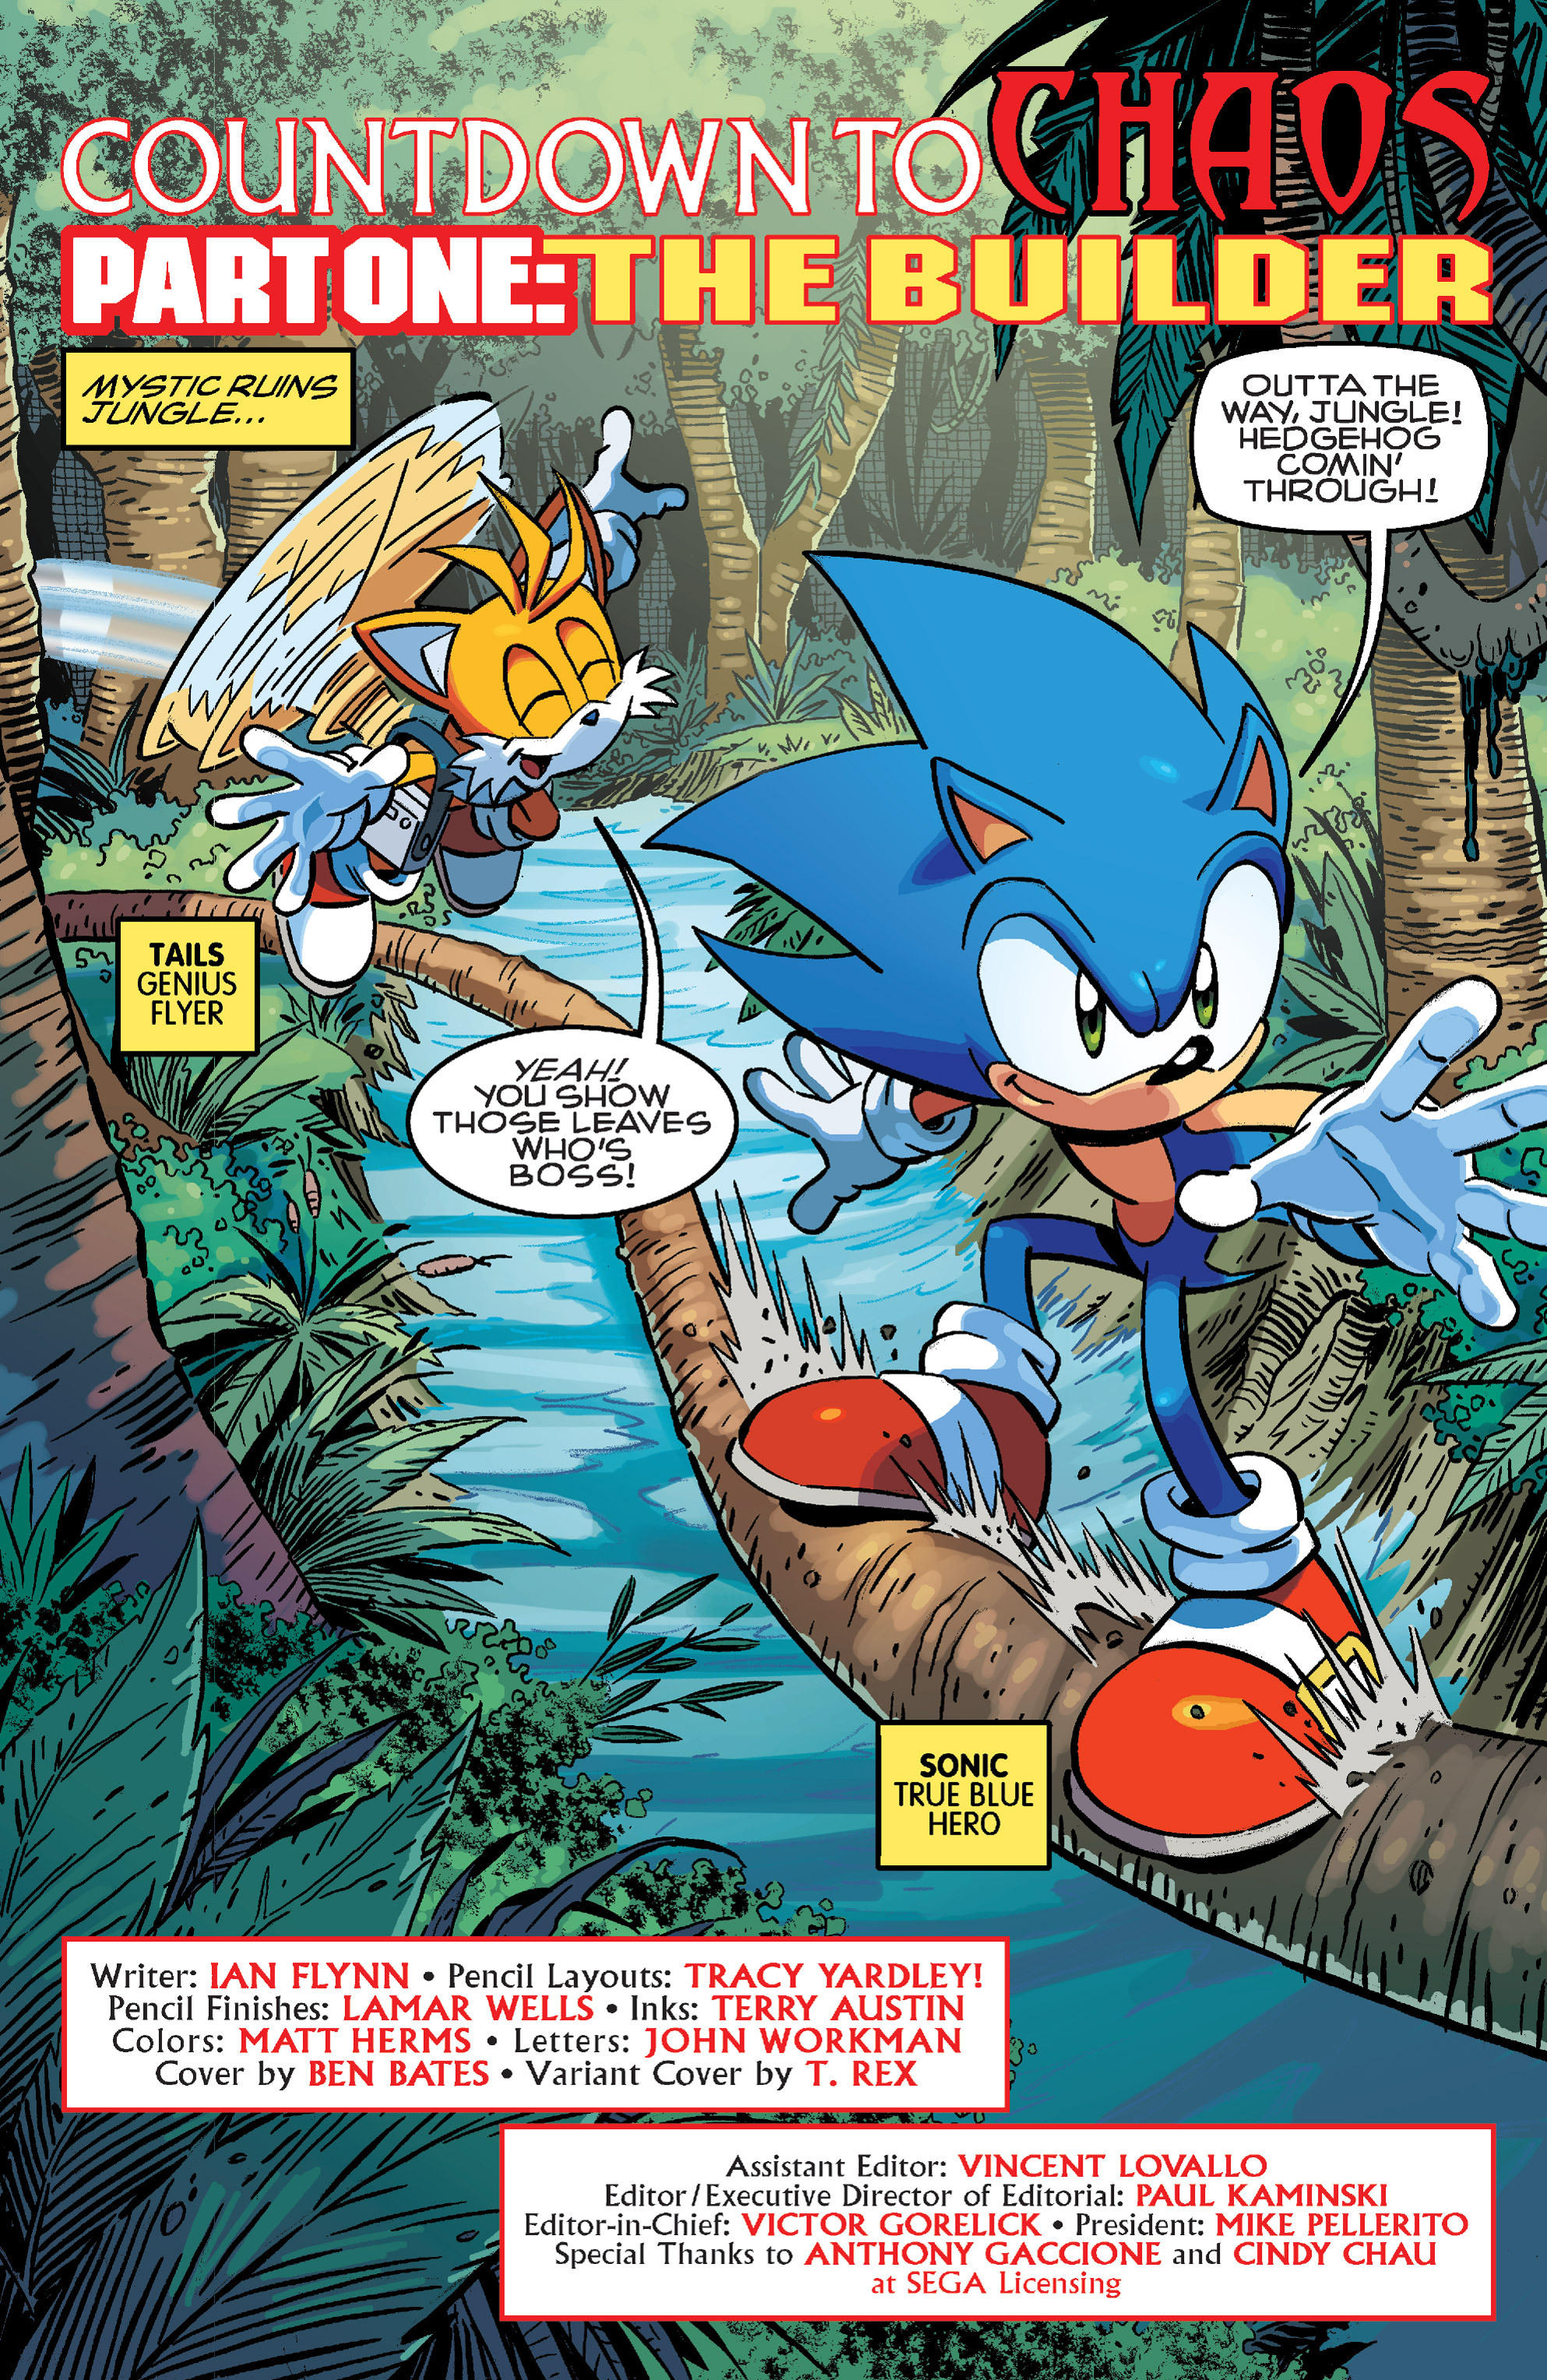 Archie Sonic Preboot Appreciation Station — 253. Sonic the